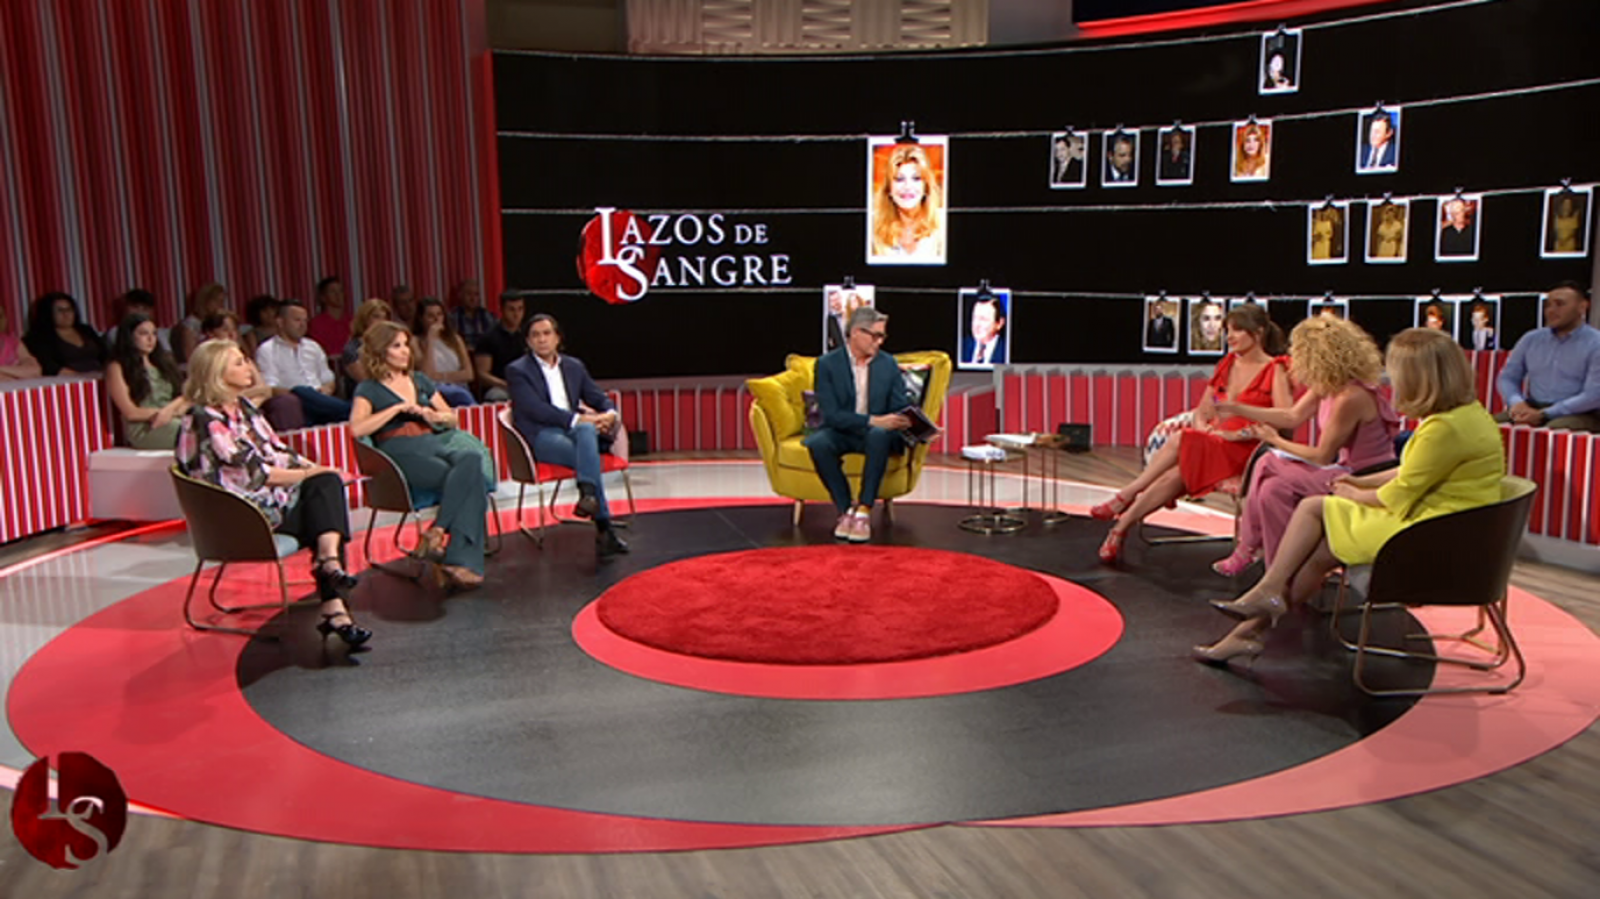 Lazos de sangre: El debate - La saga Thyssen | RTVE Play